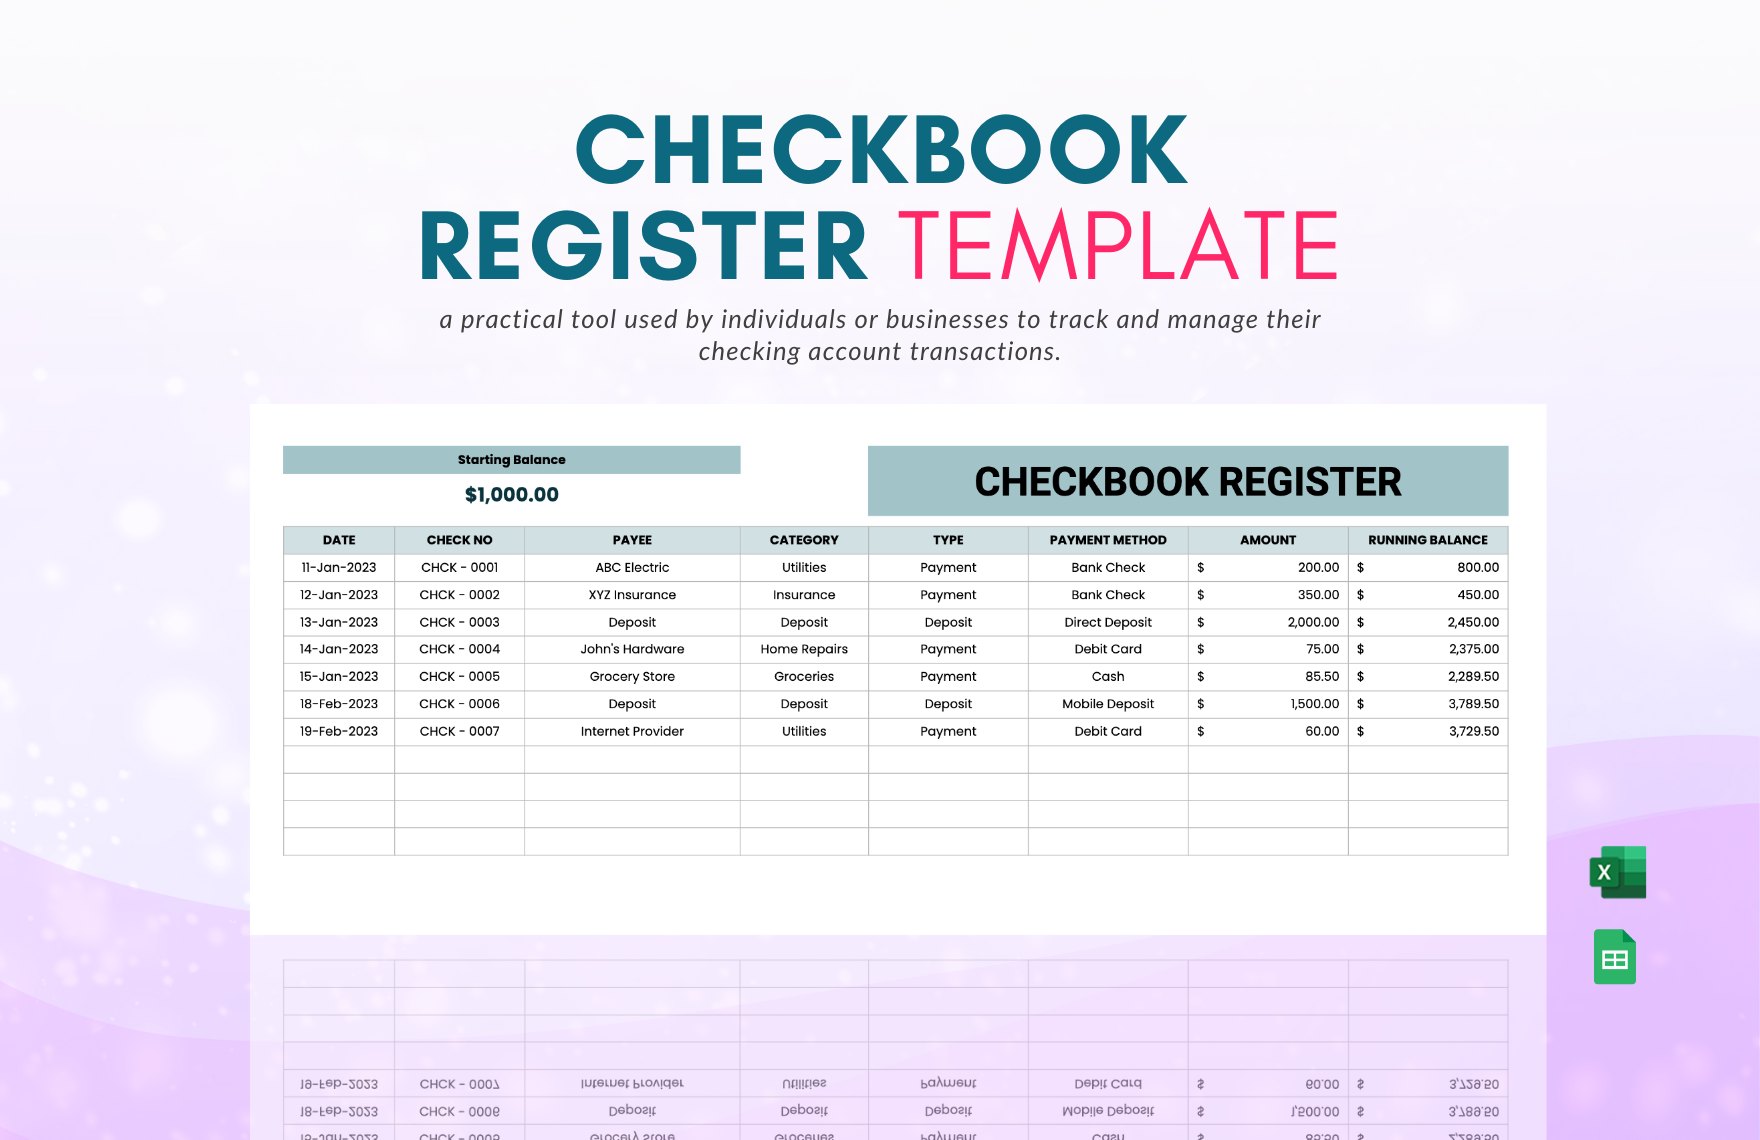 Checkbook Register Template in Excel, Google Sheets